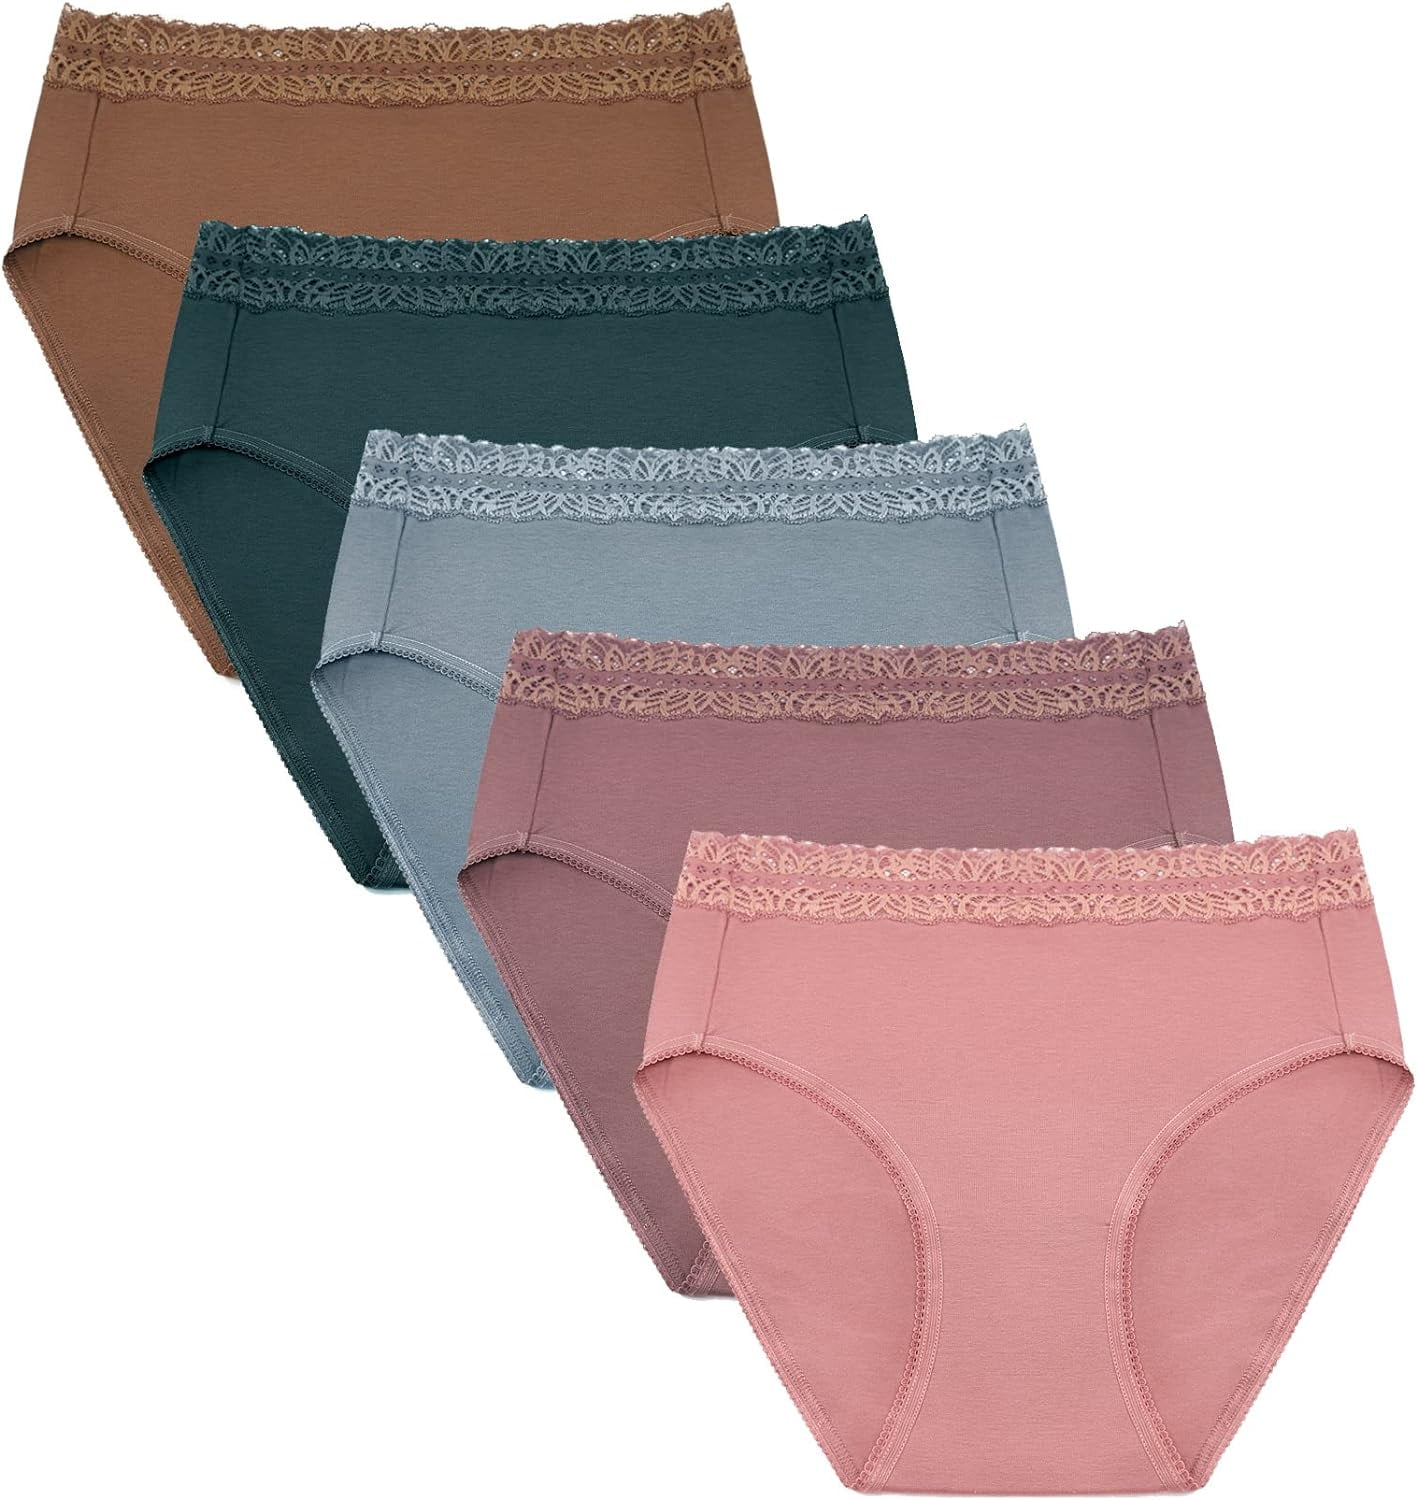 Disposable Postpartum Underwear Mesh Panties 10 Count Mesh